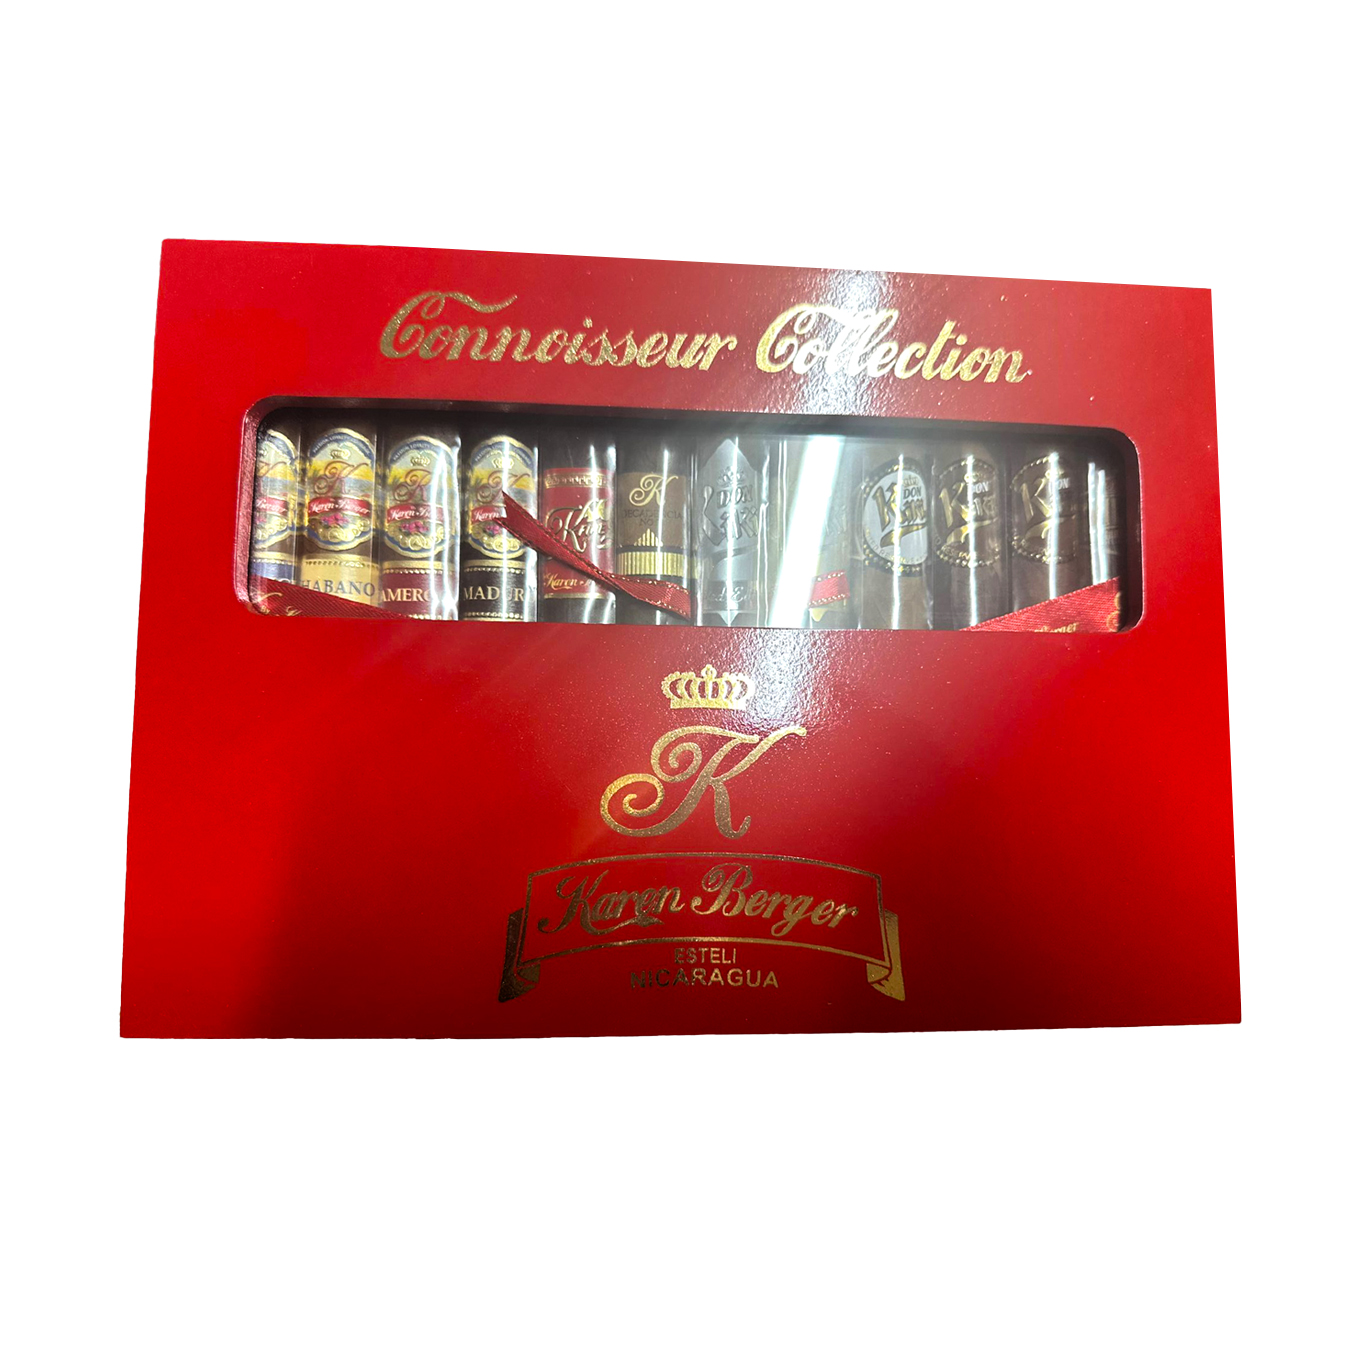 Karen Berger Cigar - Connoissour Collection - Twelve cigars sampler